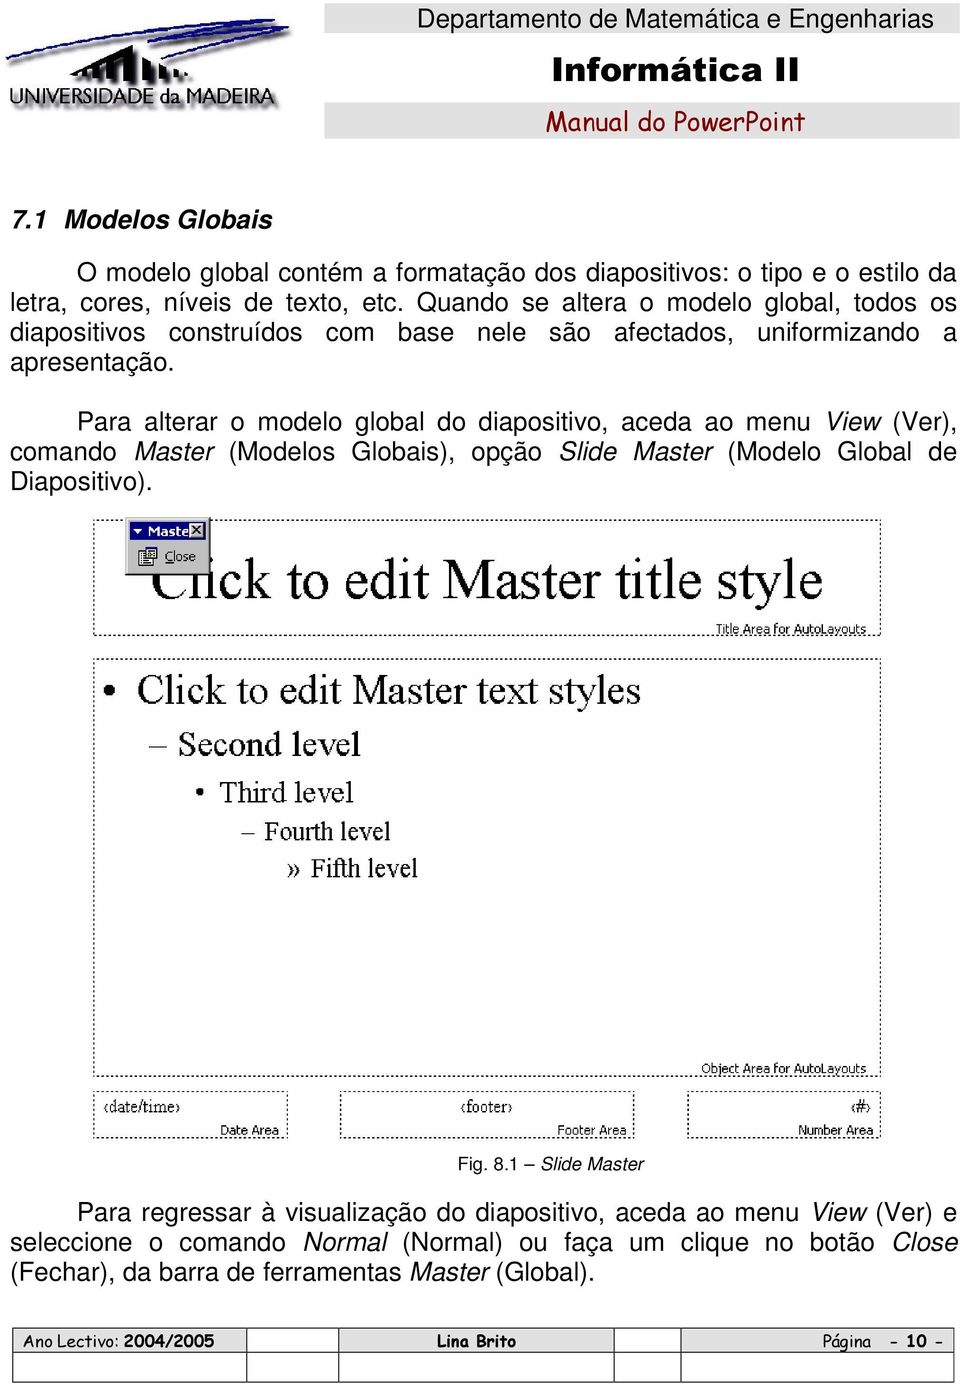 Para alterar o modelo global do diapositivo, aceda ao menu View (Ver), comando Master (Modelos Globais), opção Slide Master (Modelo Global de Diapositivo).